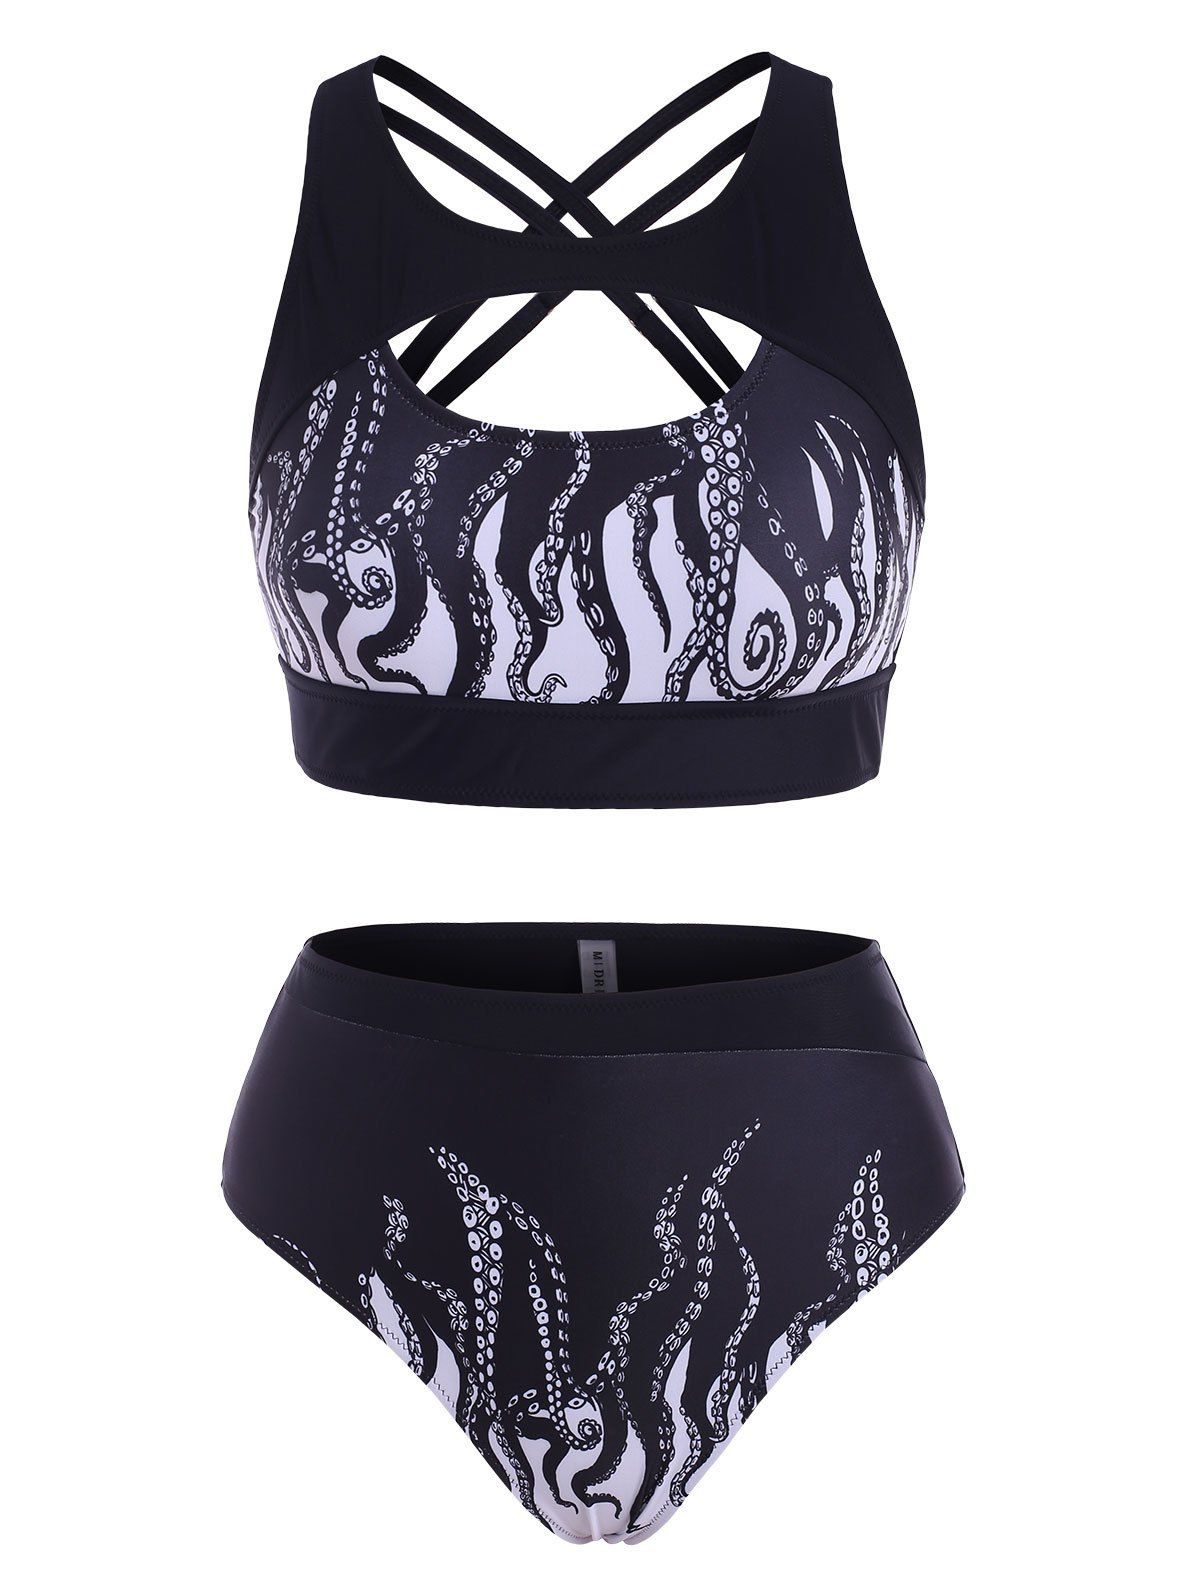 Beach Cutout Swimsuit Criss Cross Octopus Print Tankini Swimwear - BLACK L